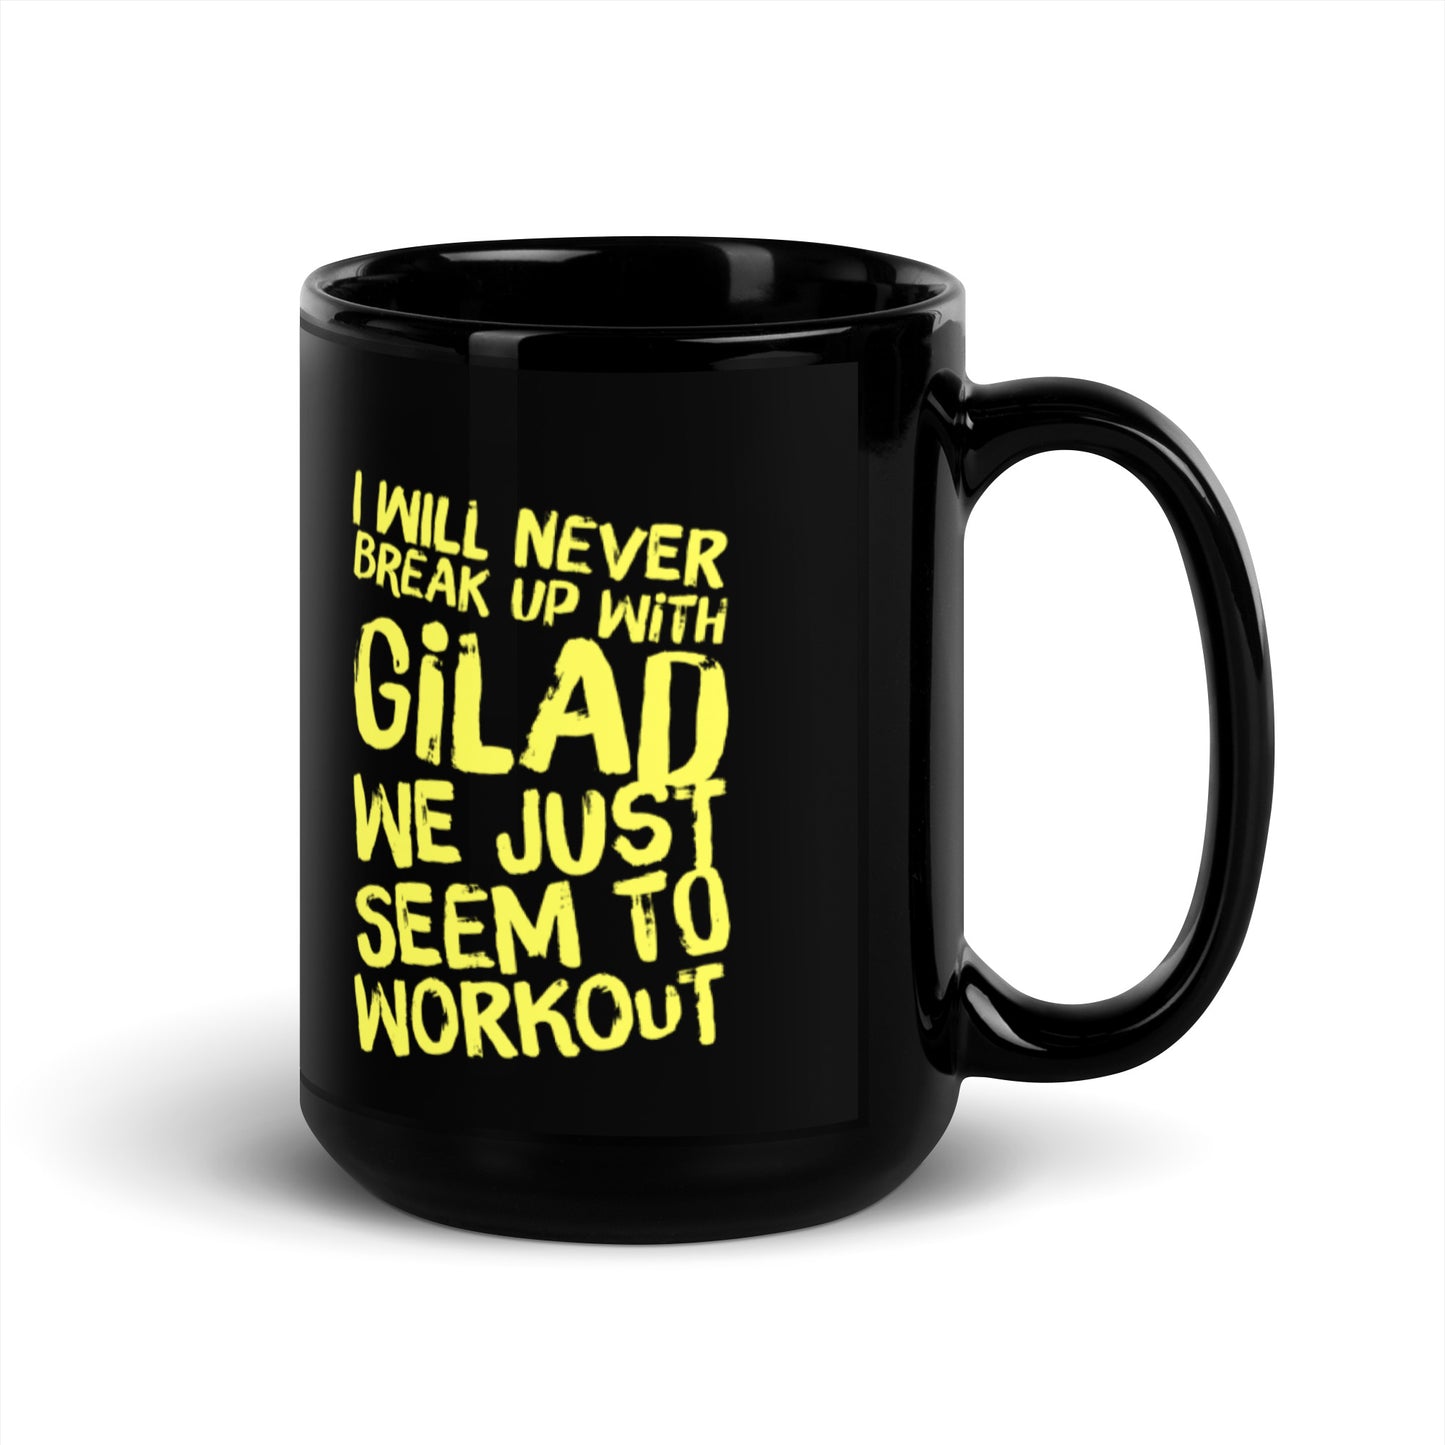 I will Never Break Up With Gilad We just seem to workout Black Glossy Mug Black Glossy Mug